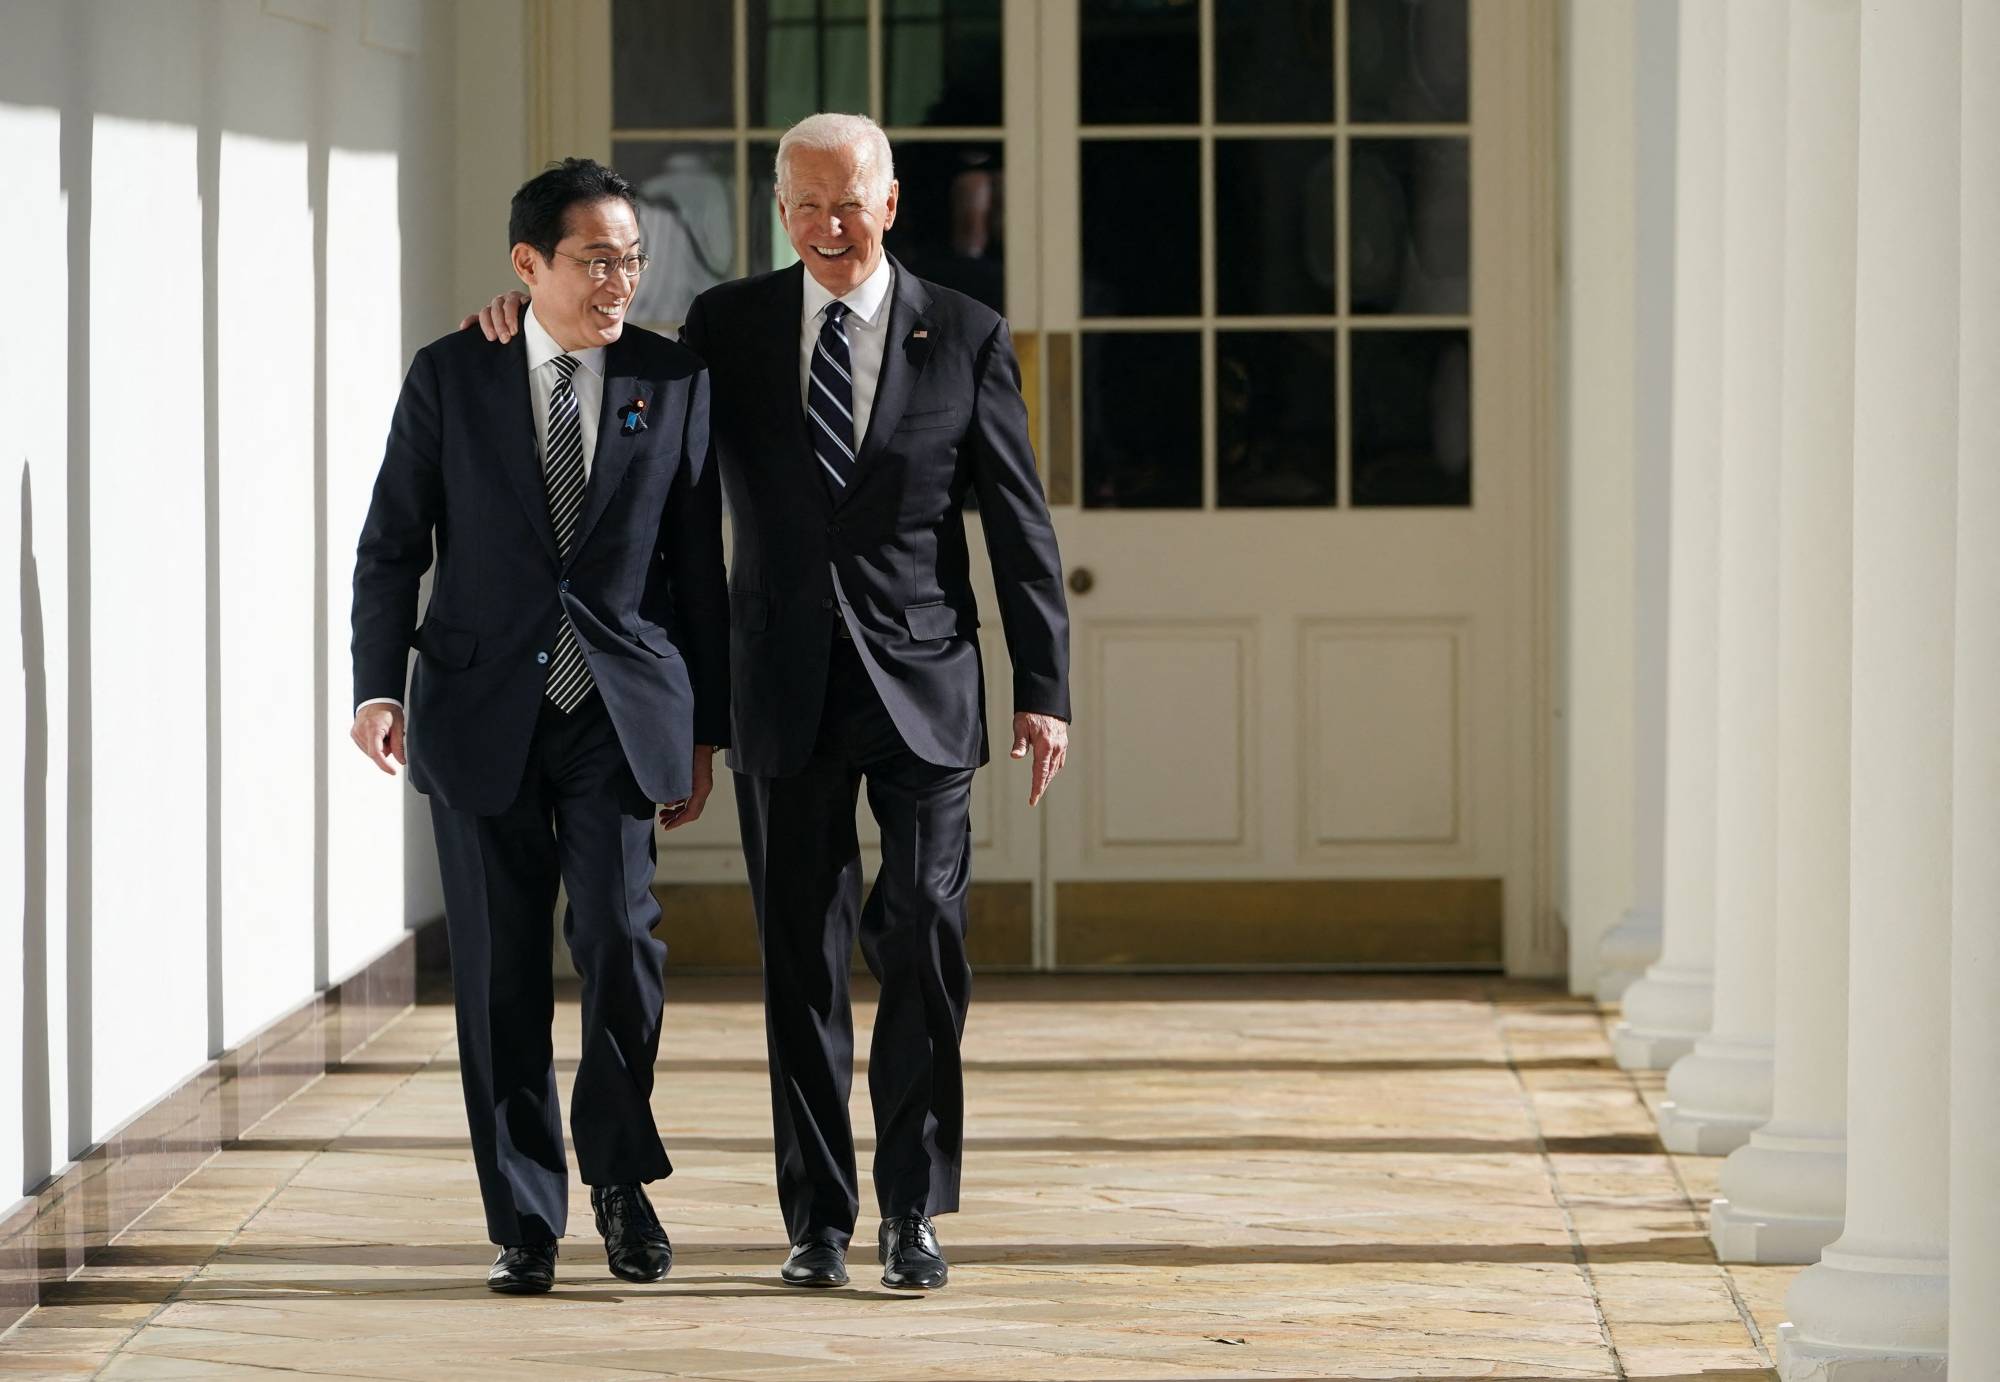 US President Joe Biden and Prime Minister Fumio Kishida walk through the colonnade of the White House in Washington